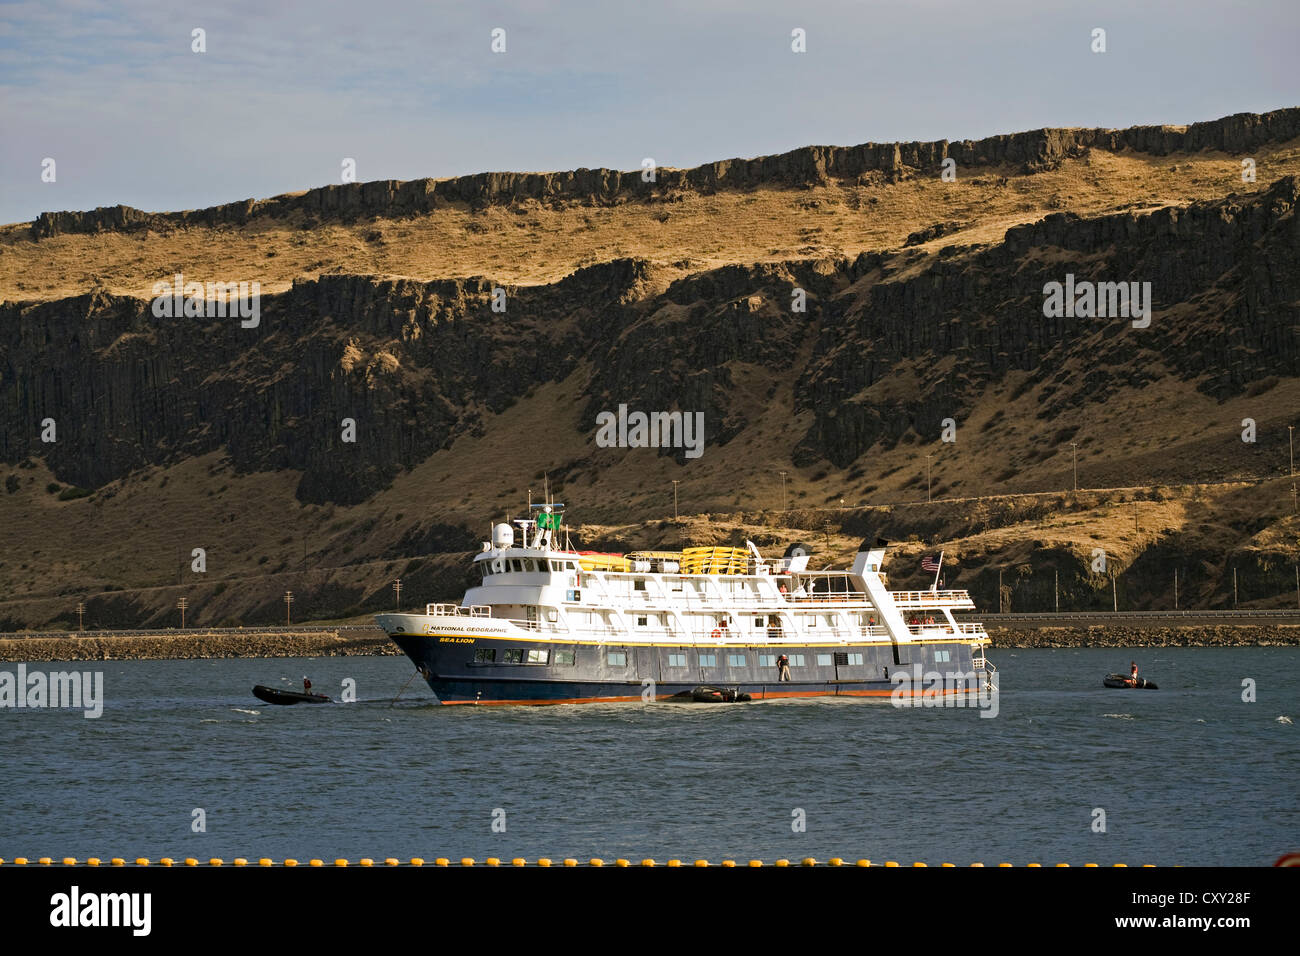 Die National Geographic Expedition Schiff Sea Lion vor Anker in der Columbia River Gorge, Oregon Stockfoto